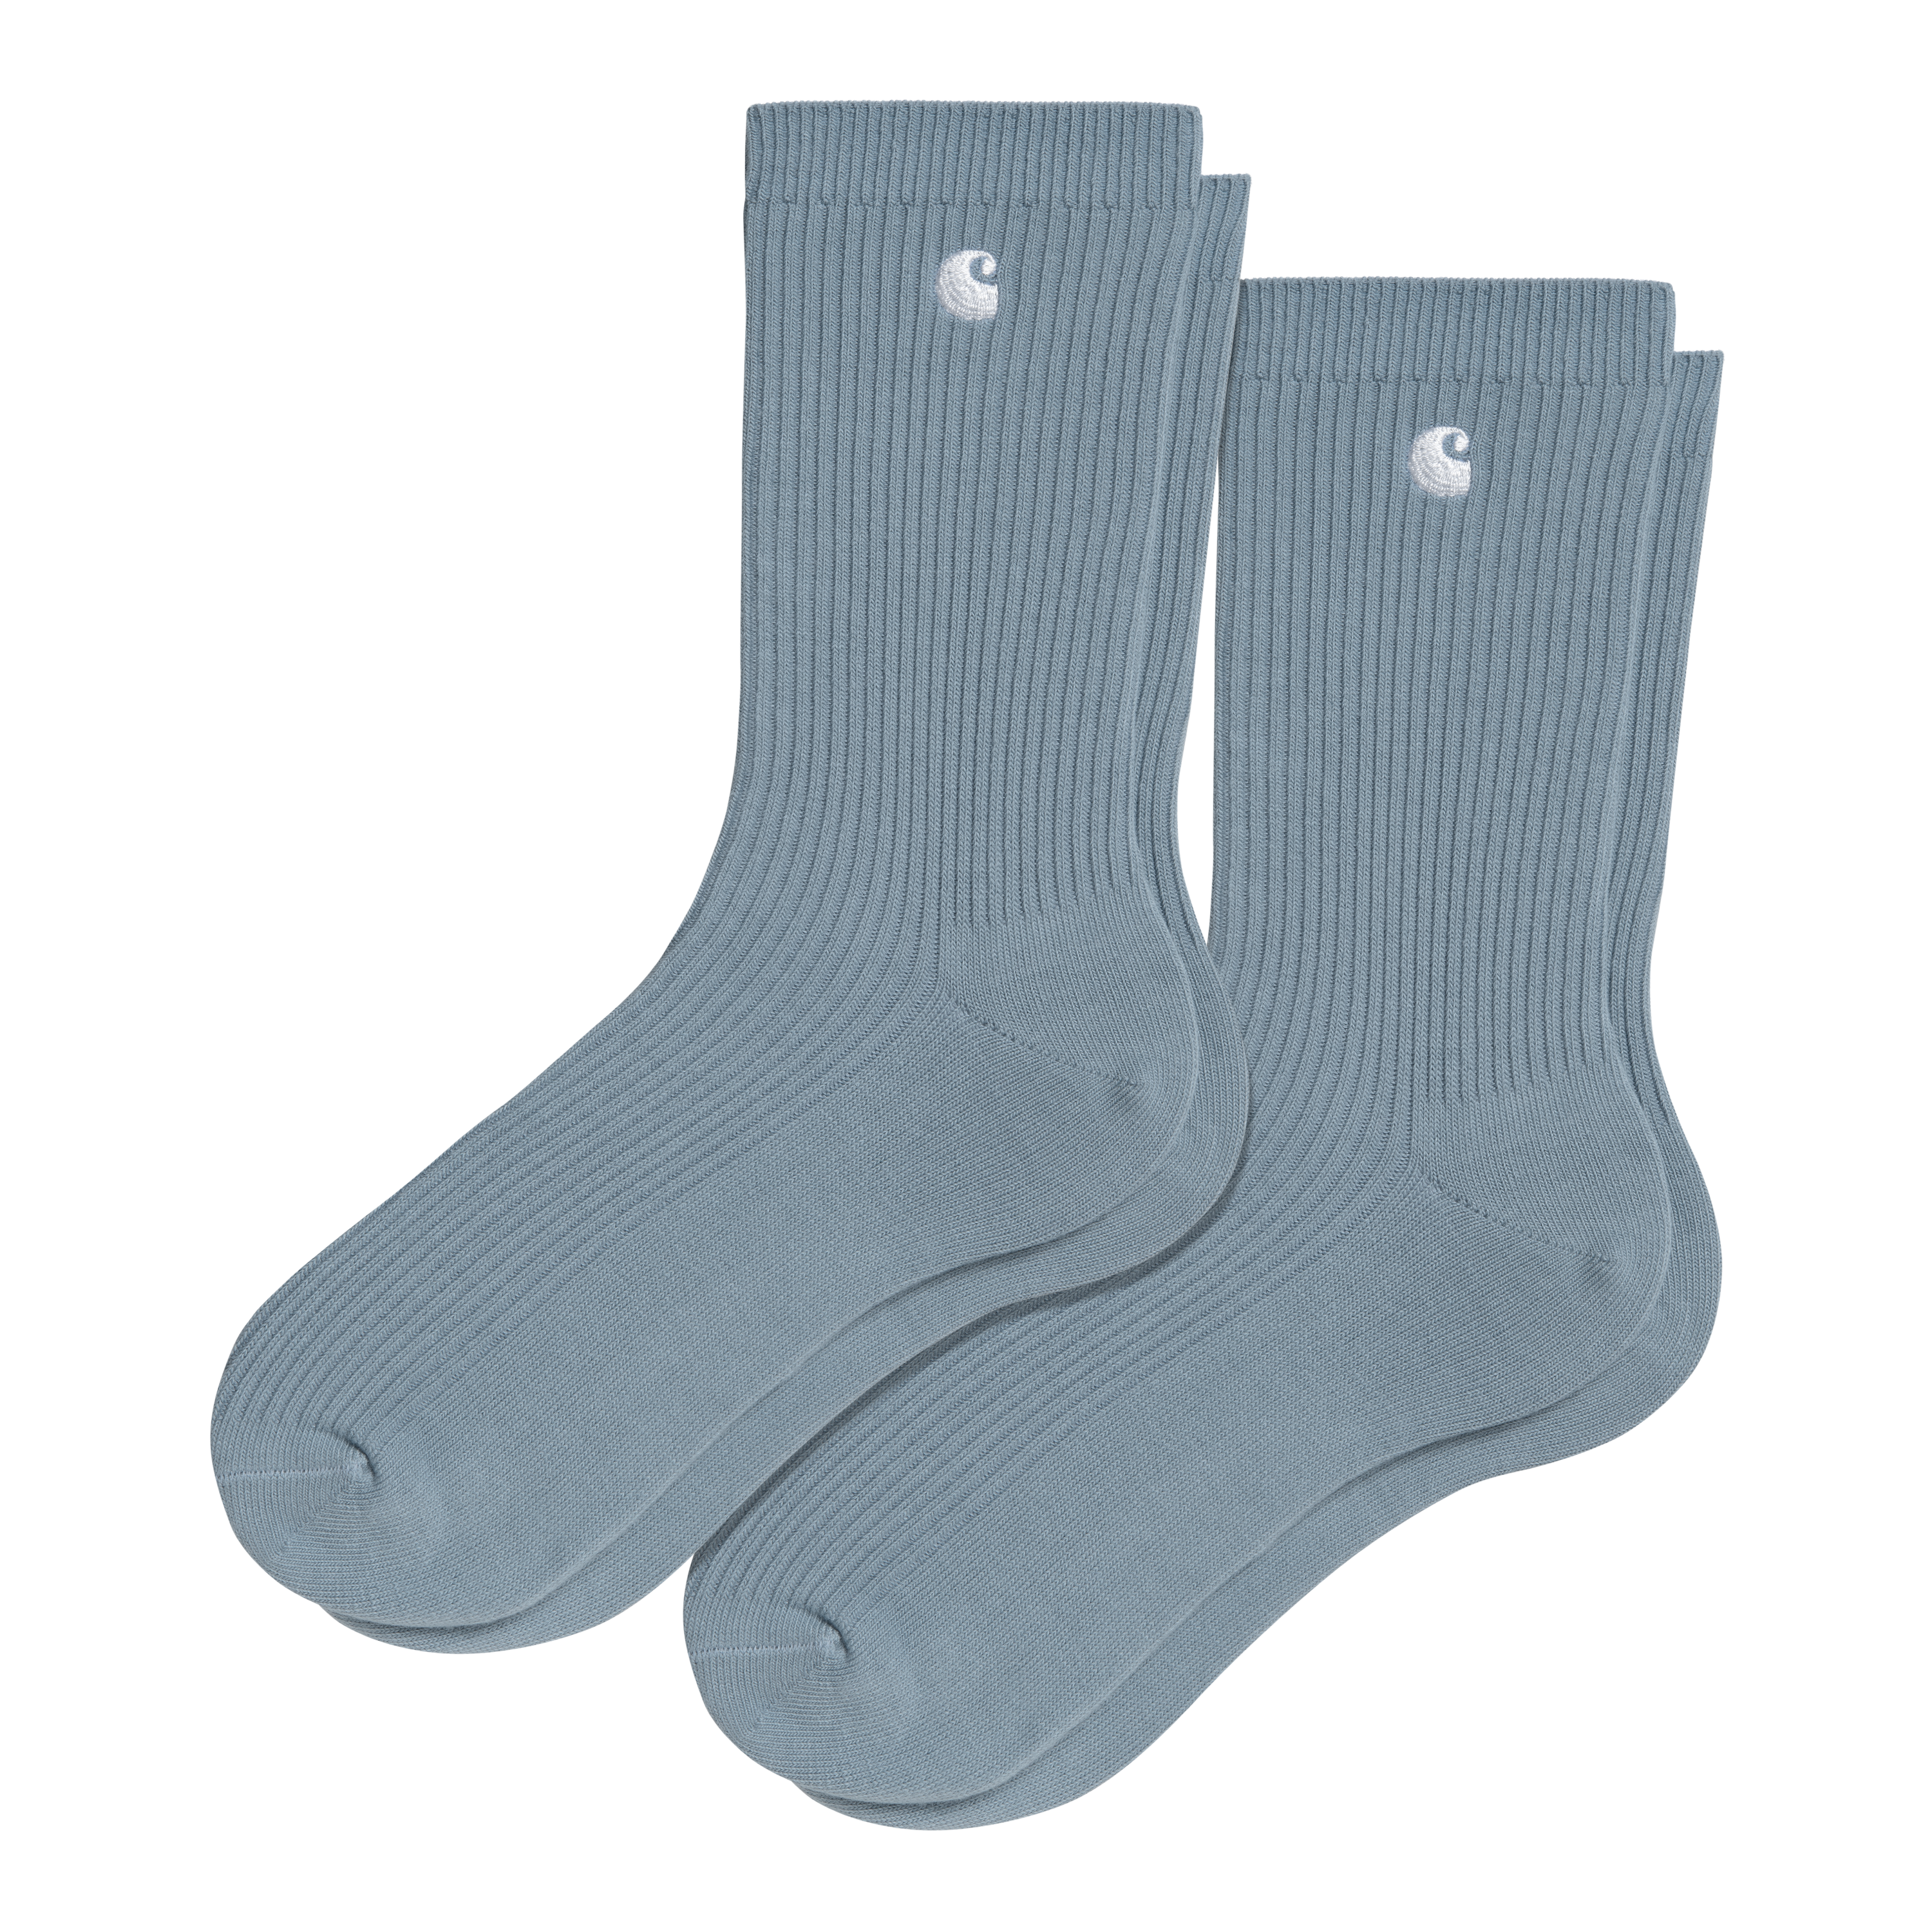 Carhartt WIP Madison Pack Socks in Blu